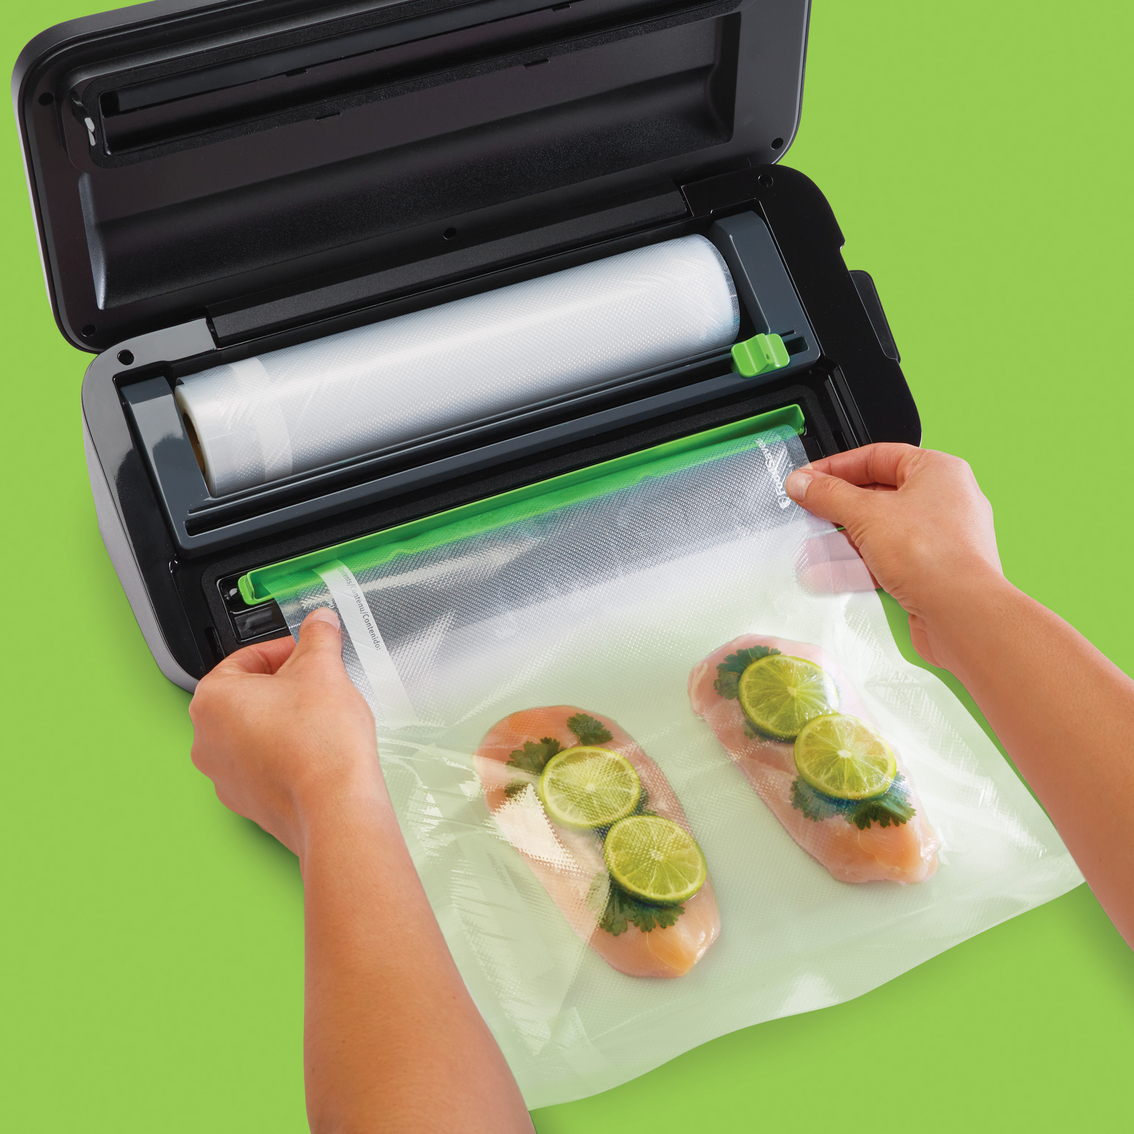 FoodSaver Black/Silver Vacuum Food Sealer Kit - Image 2 of 2